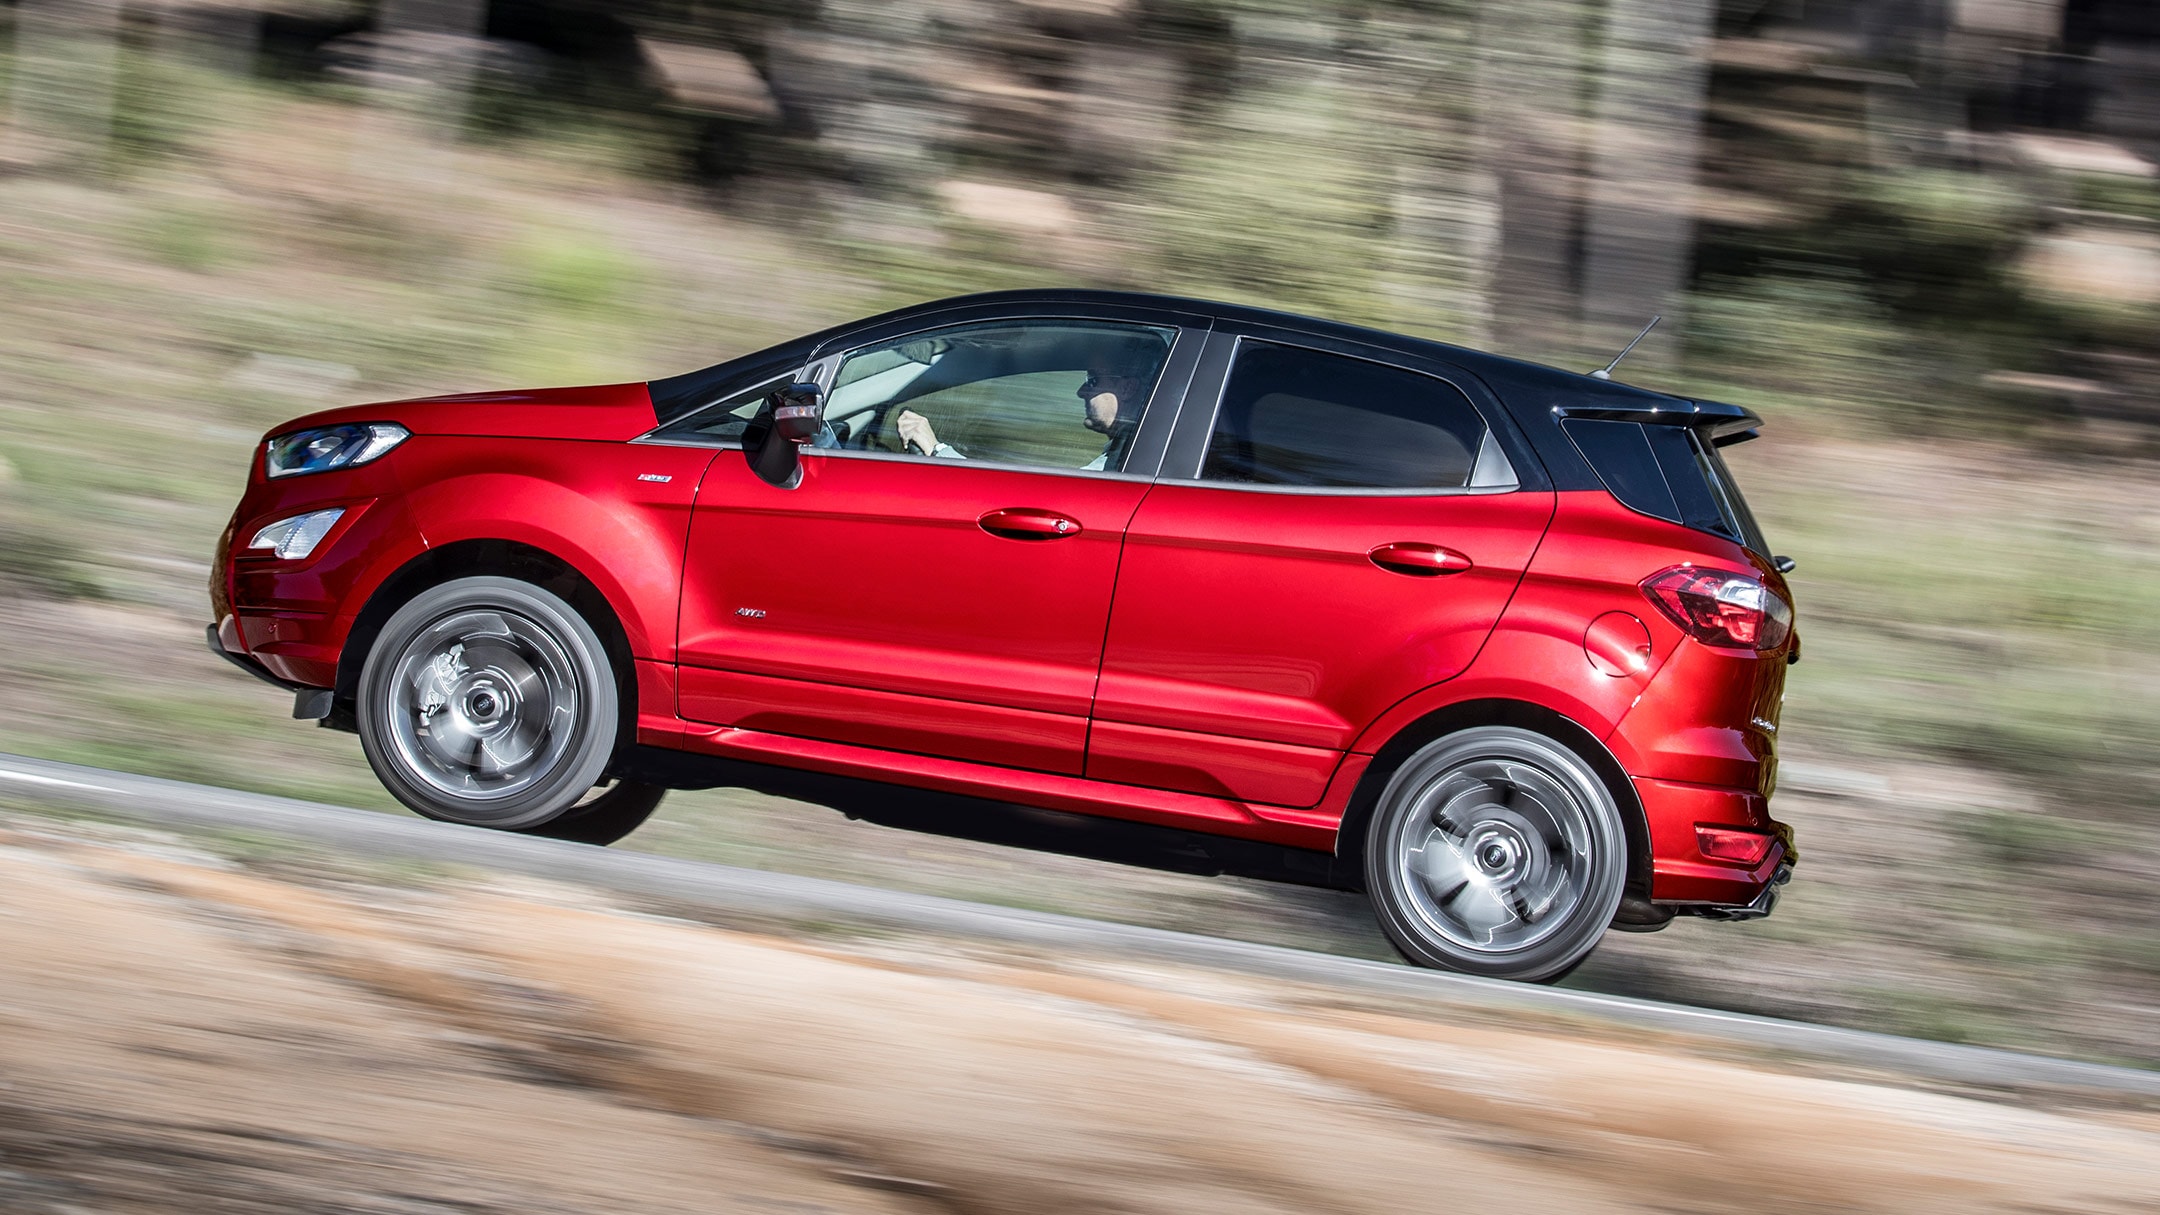 Ford Ecosport in Rot. Seitensicht. Fahrszene an einem steilen Berg